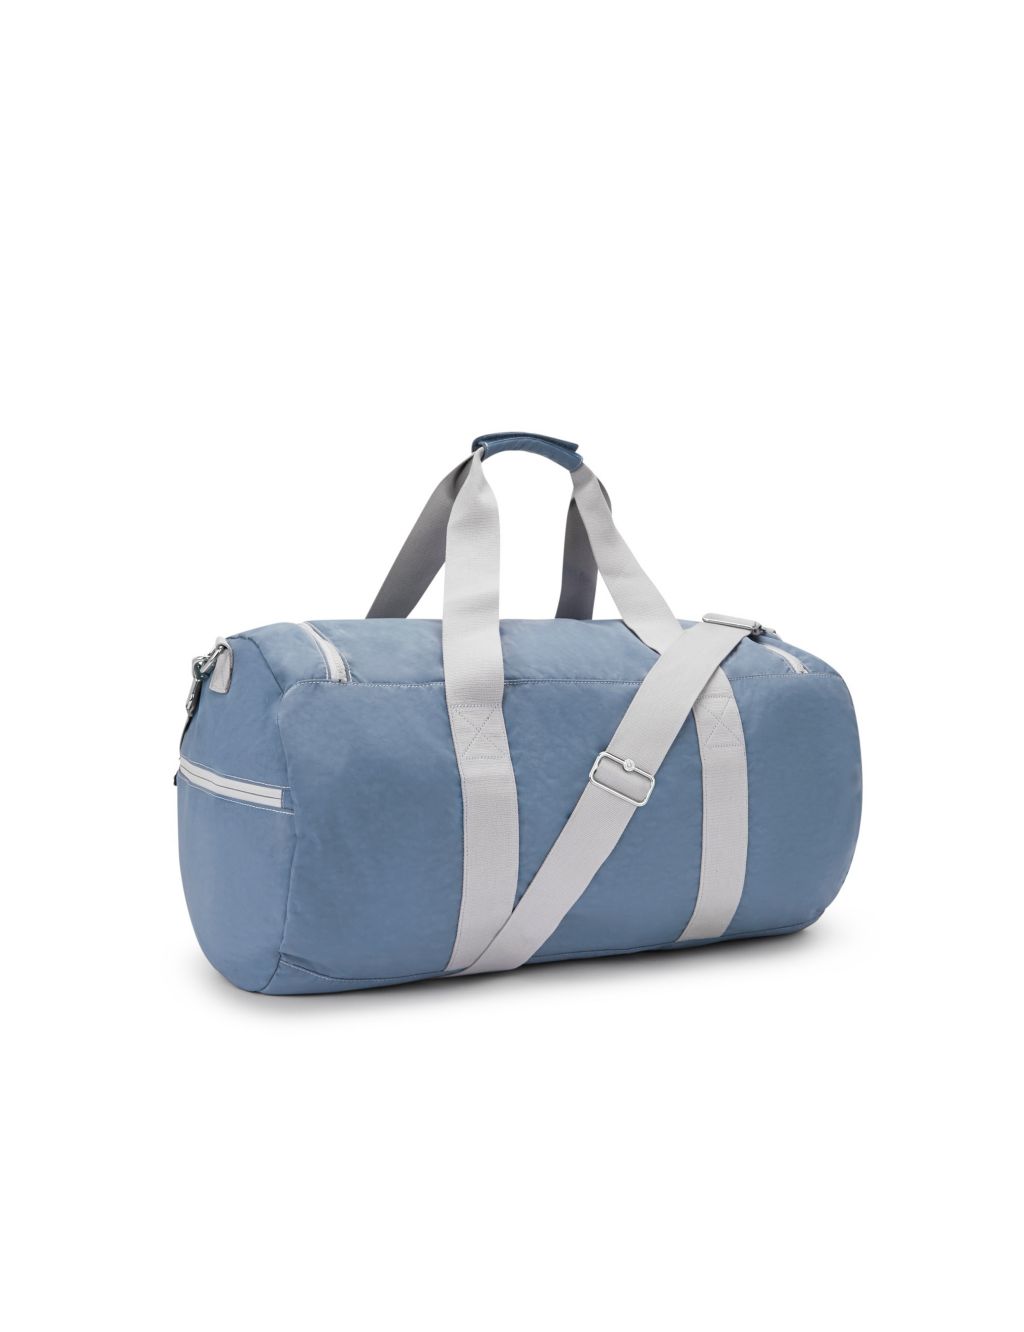 Nylon Duffle Bag image 4